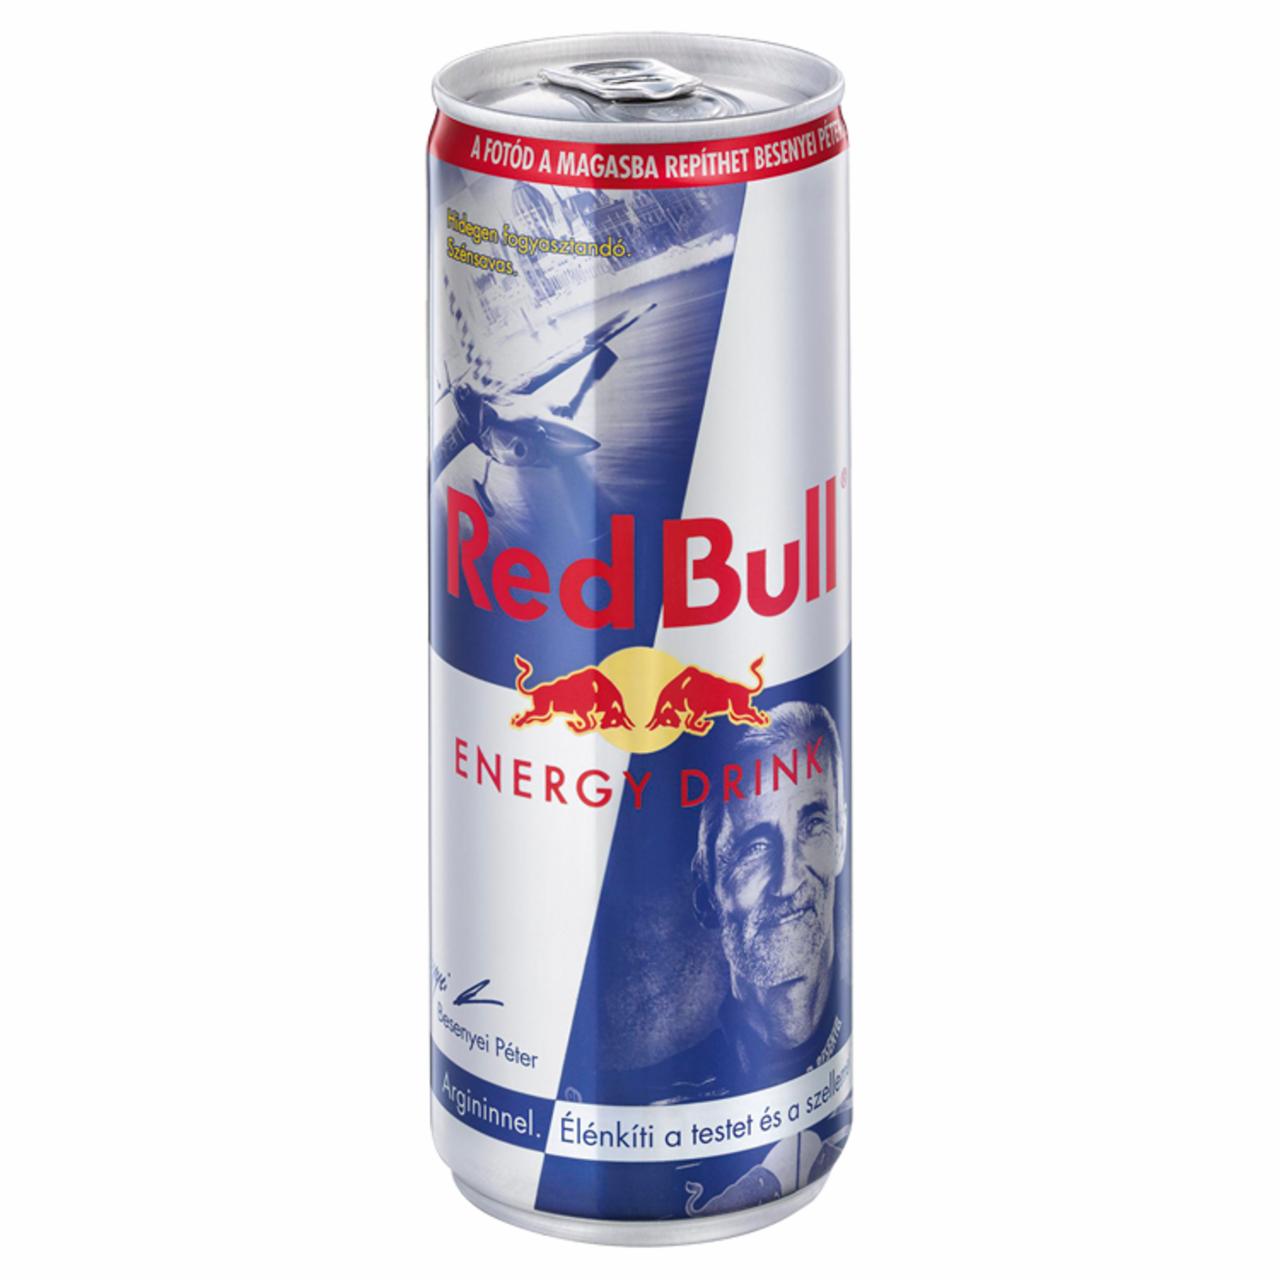 Képek - Red Bull Energy Drink koffein és arginin tartalmú ital 250 ml